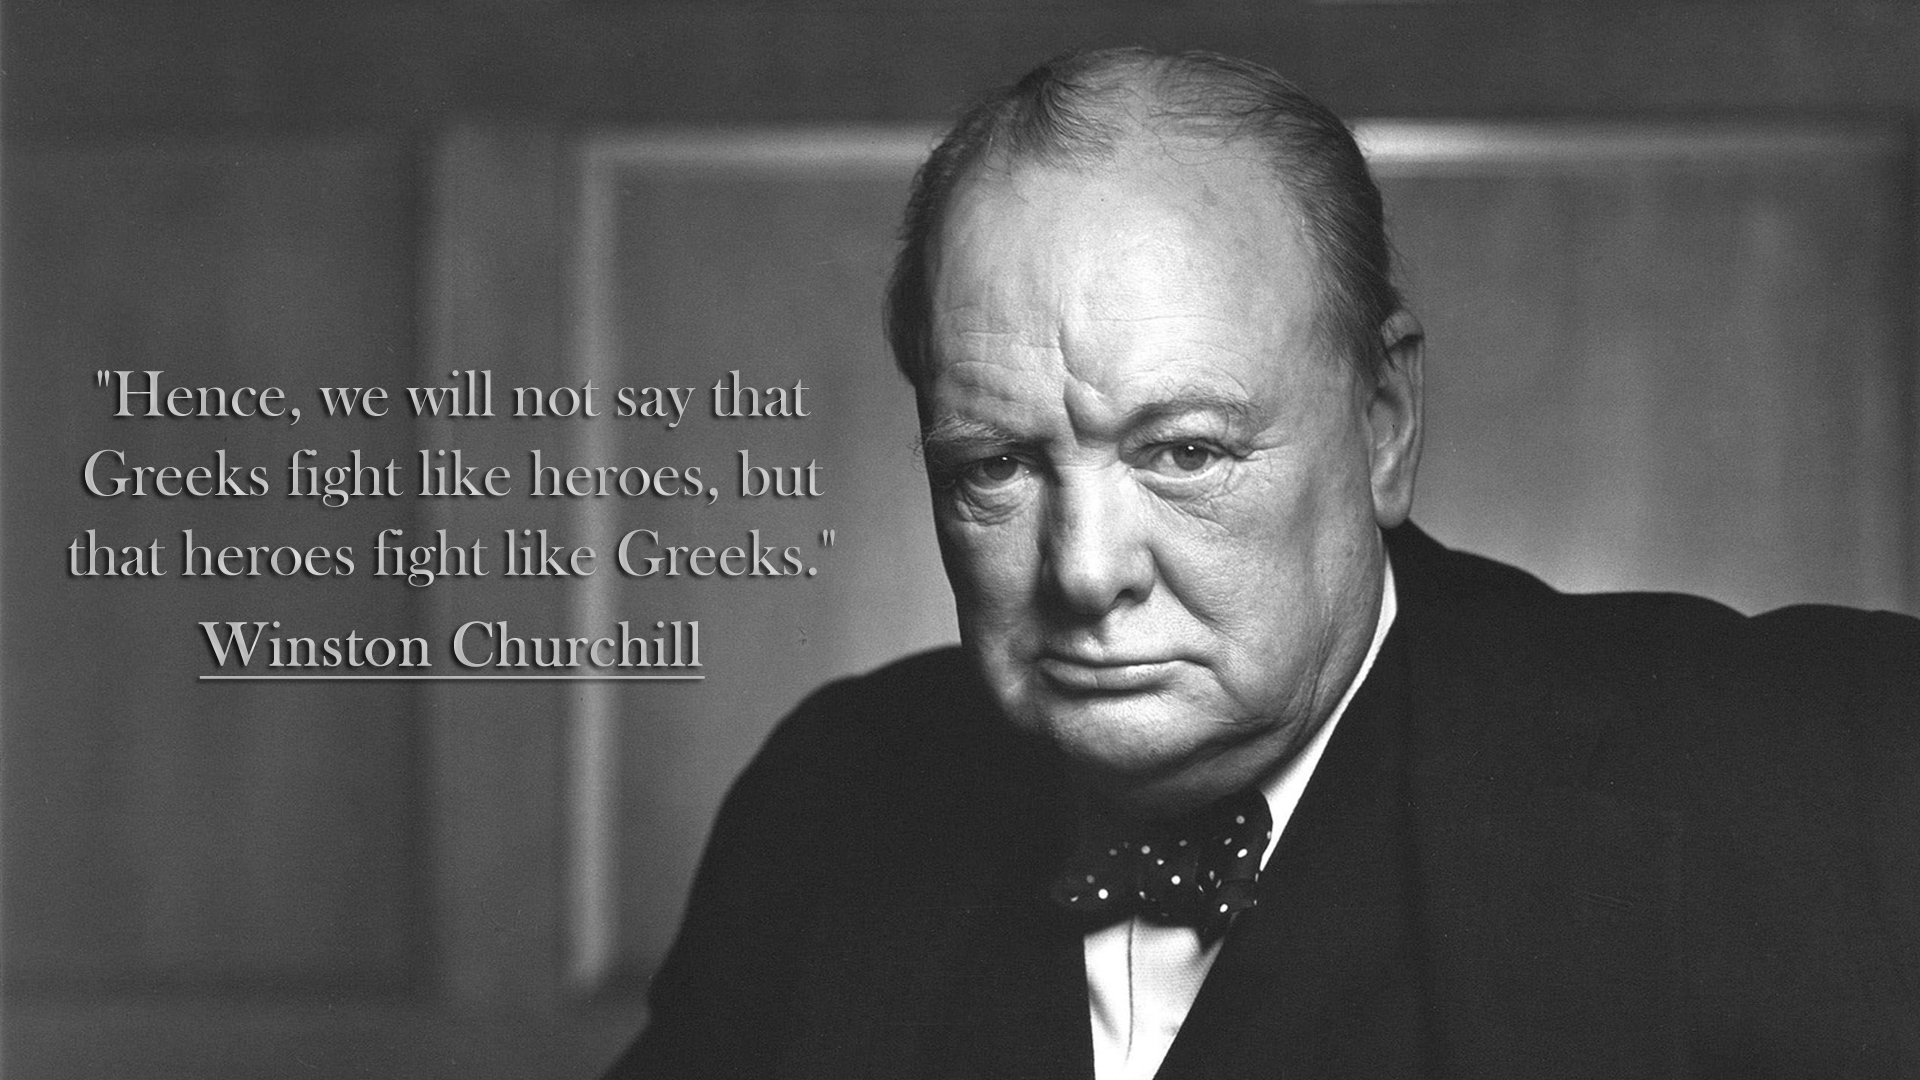 People 1920x1080 Winston Churchill quote Greek celebrity political figure men